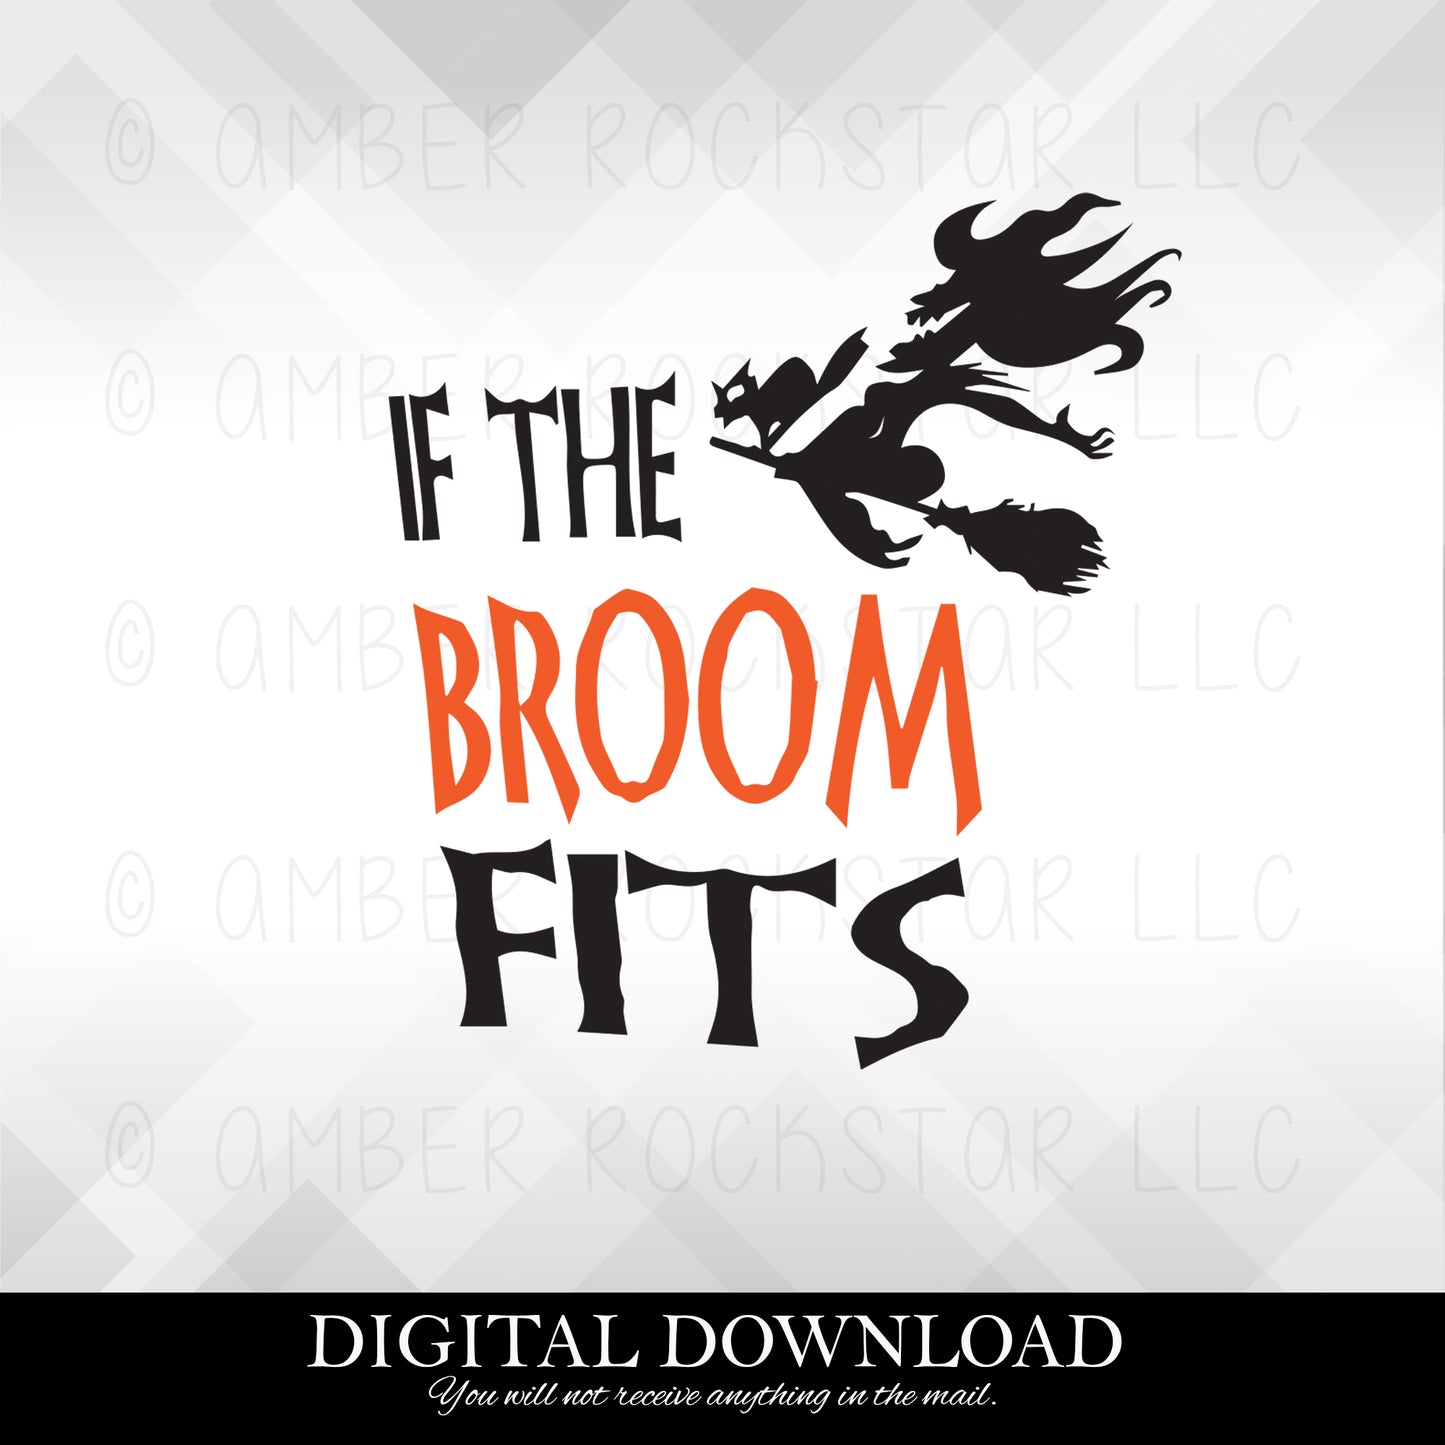 DIGITAL DOWNLOAD: If the Broom Fits - Halloween SVG file | Amber Rockstar